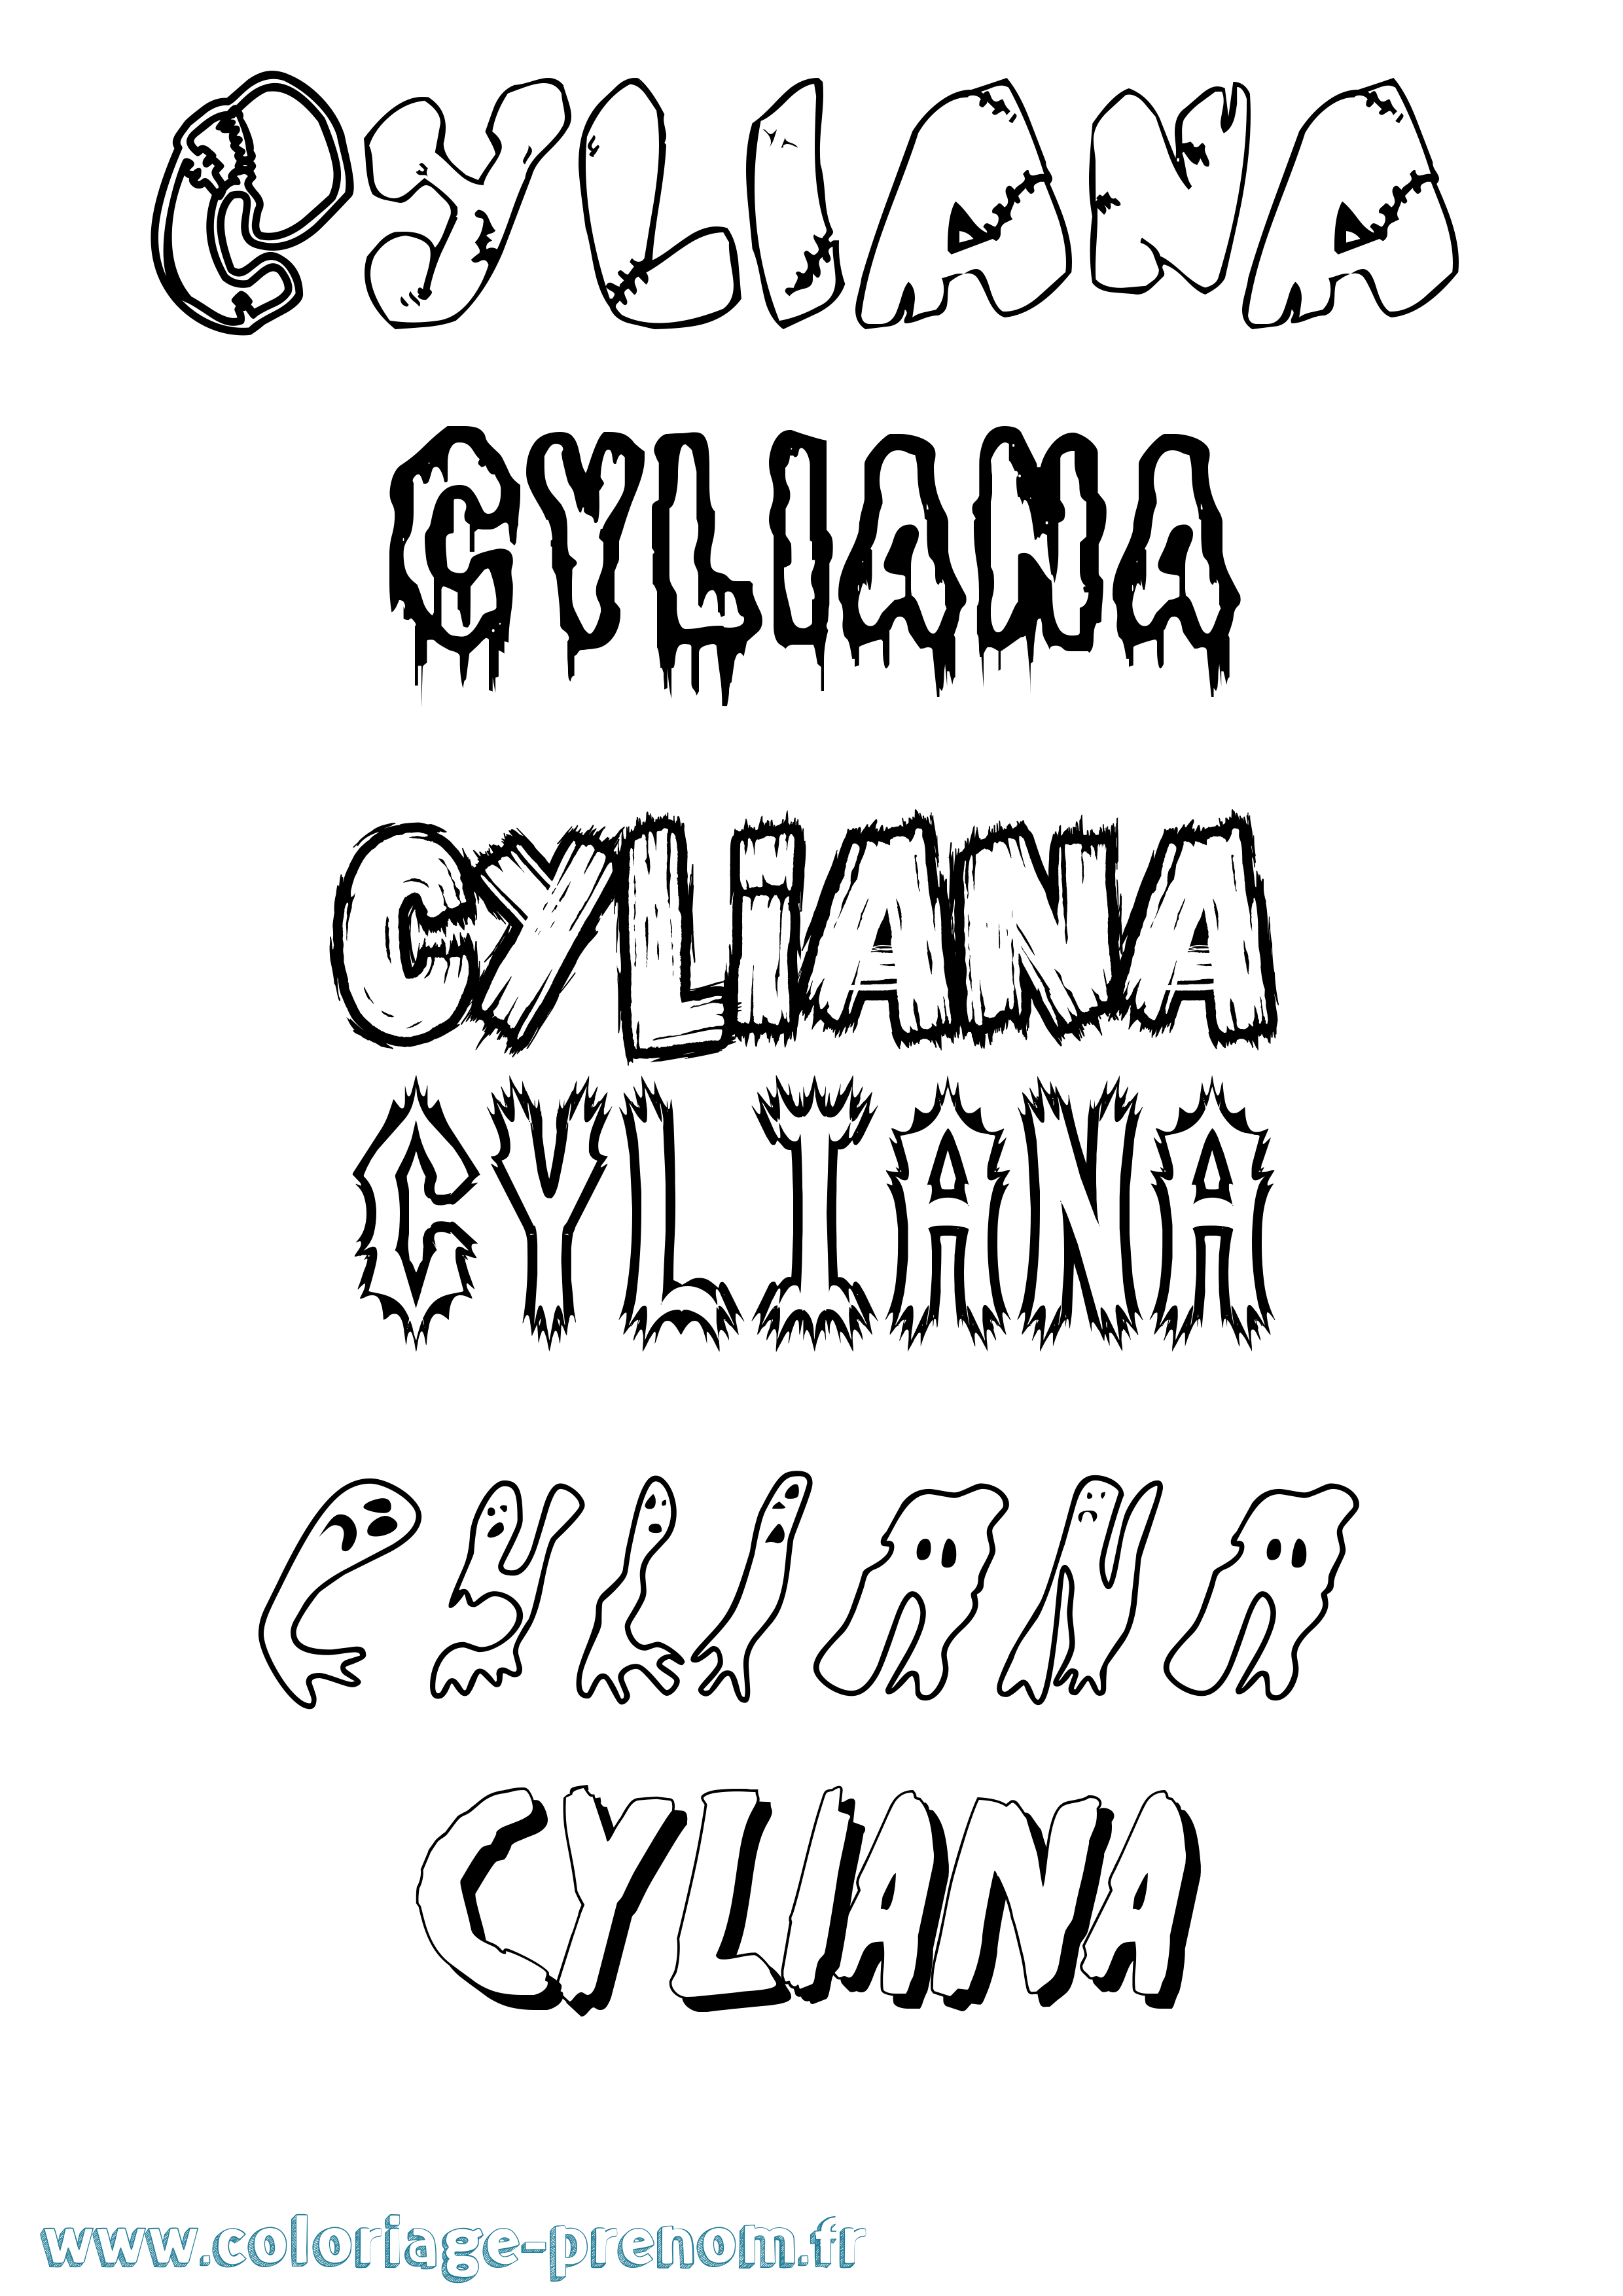 Coloriage prénom Cyliana Frisson